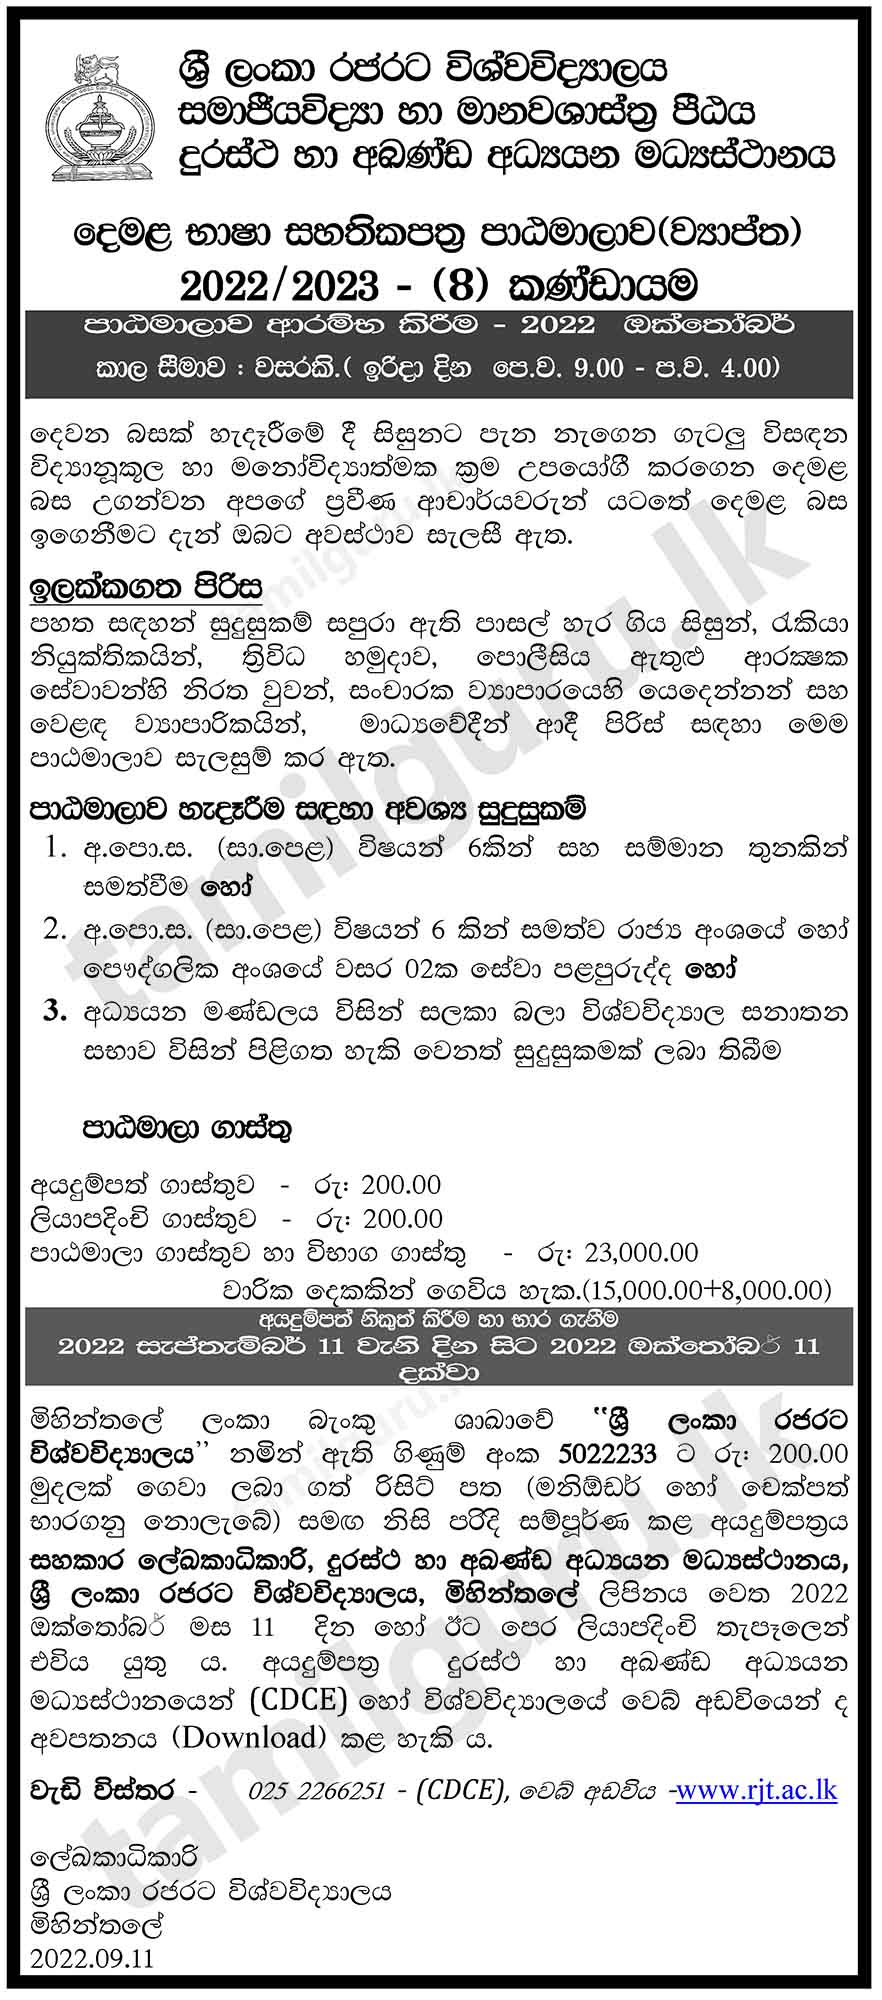 Application for Certificate in Tamil Language (Course) 2022/2023 - Rajarata University (RUSL) / දෙමළ භාෂා සහතිකපත්‍ර පාඨමාලාව